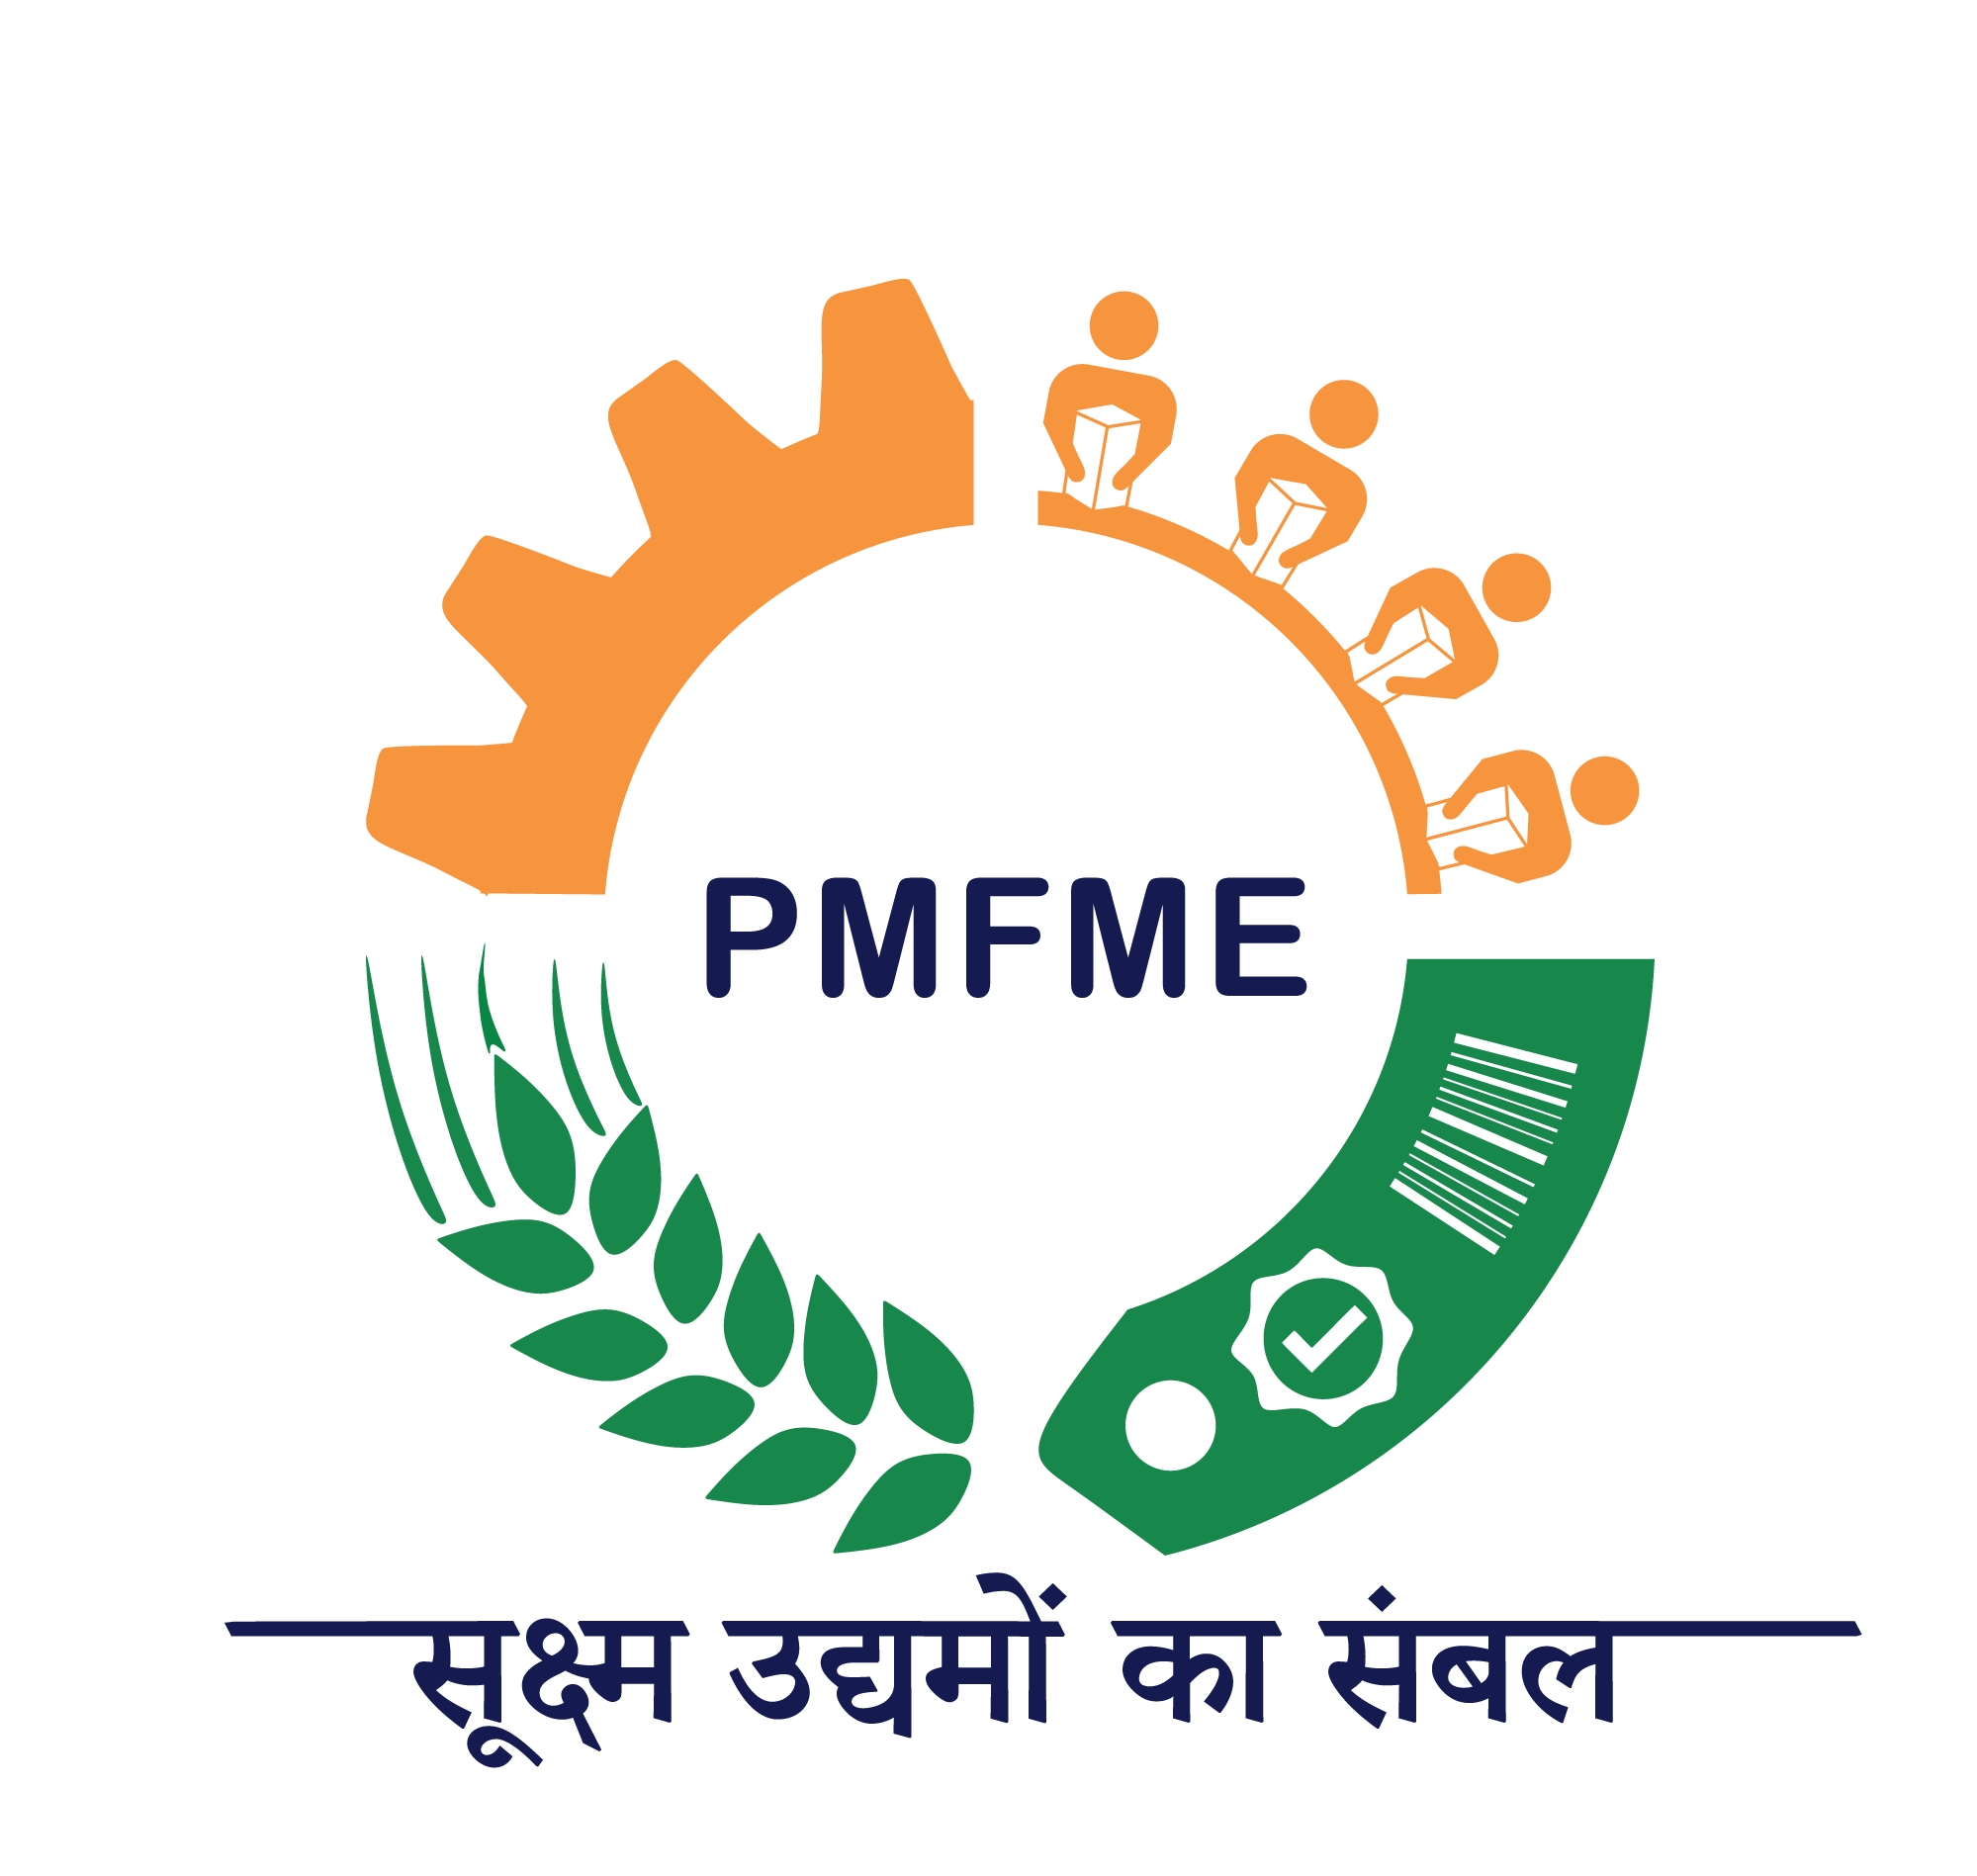 PMFME logo